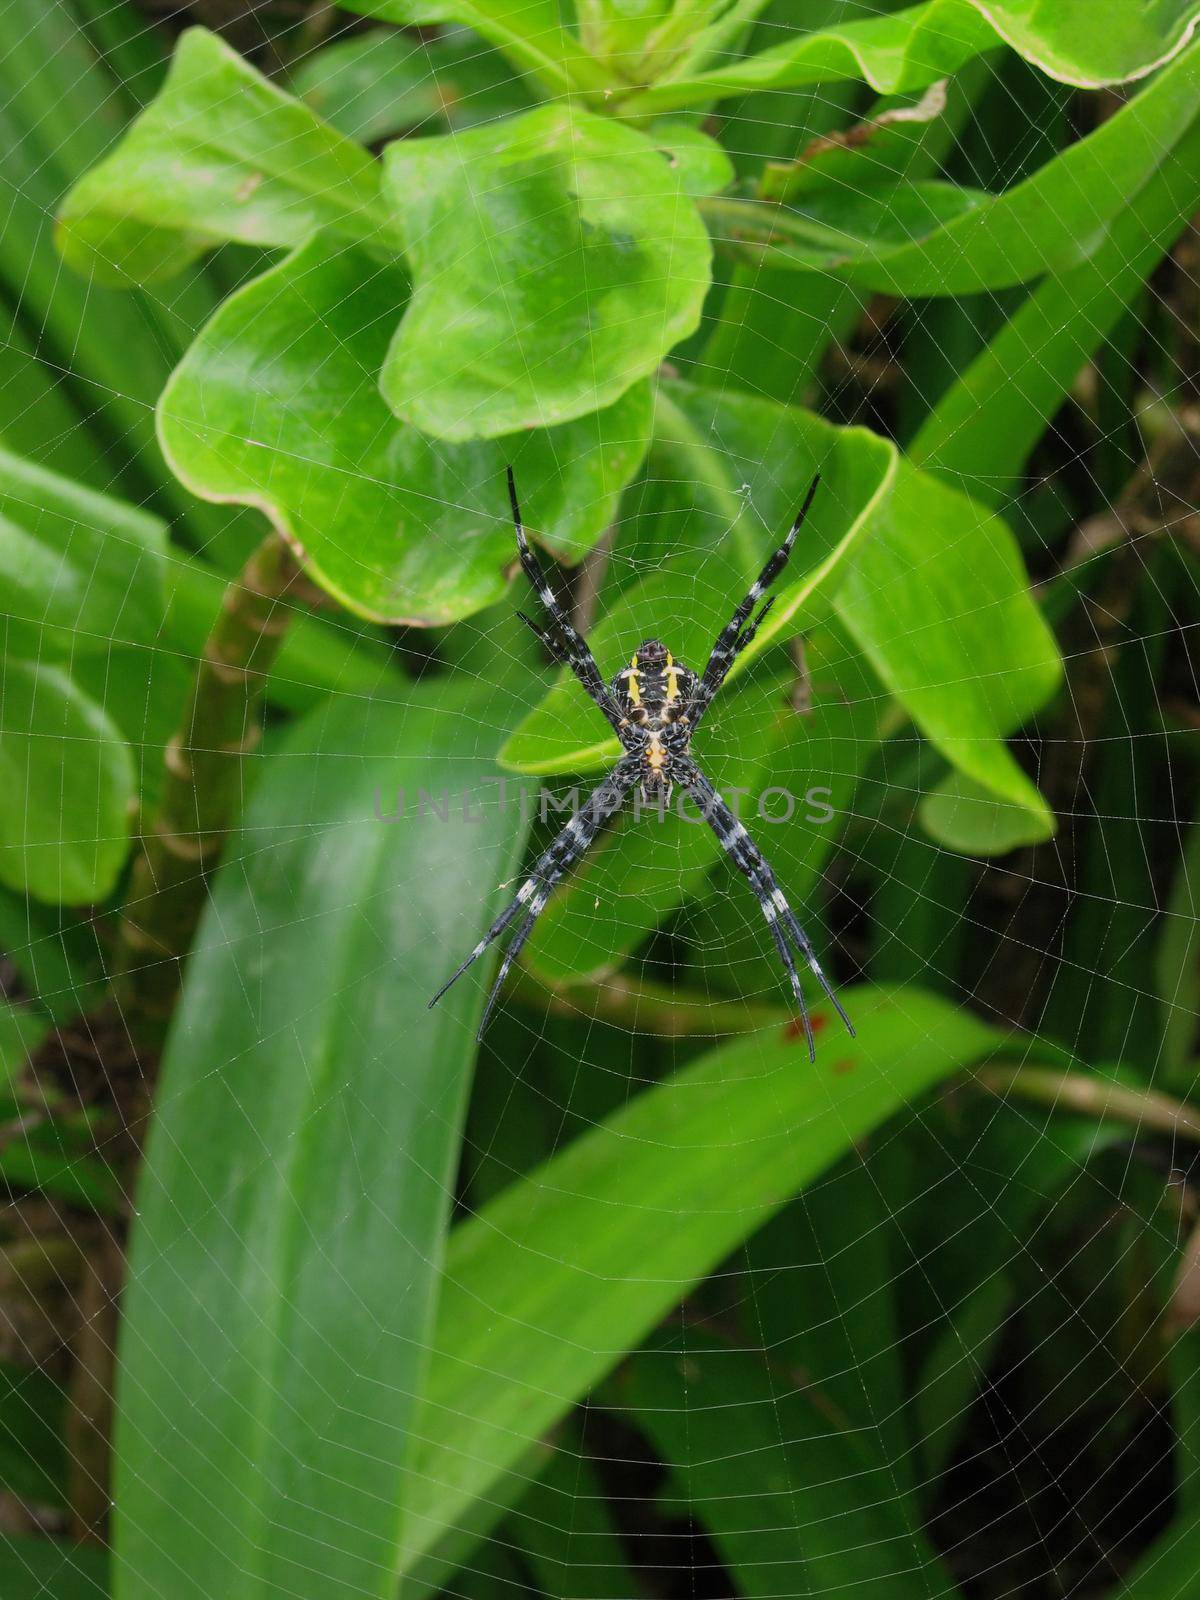 Hawaiian Garden Spider Argiope appensa on a web on Maui, Hawaii, in Hana by markvandam